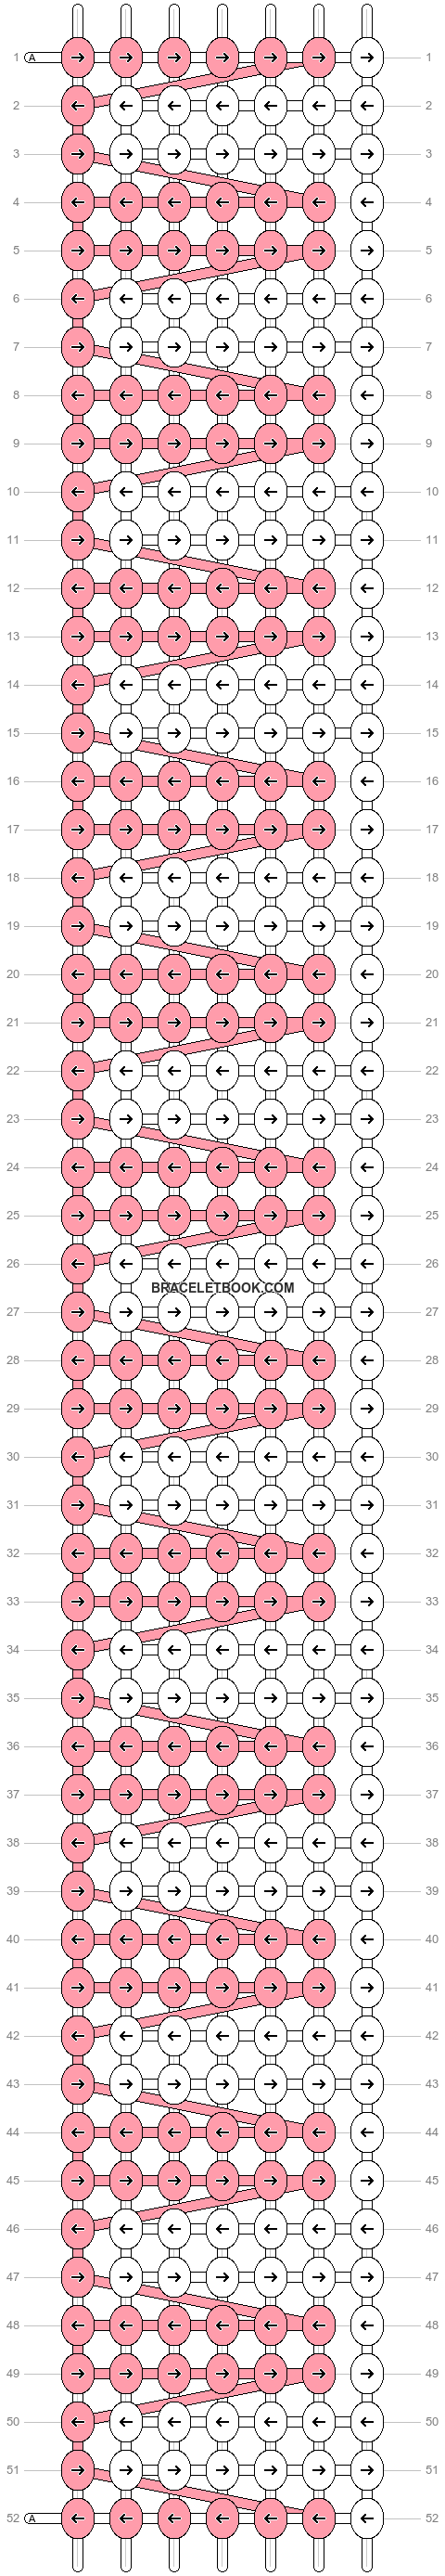 Alpha pattern #15234 variation #27258 pattern